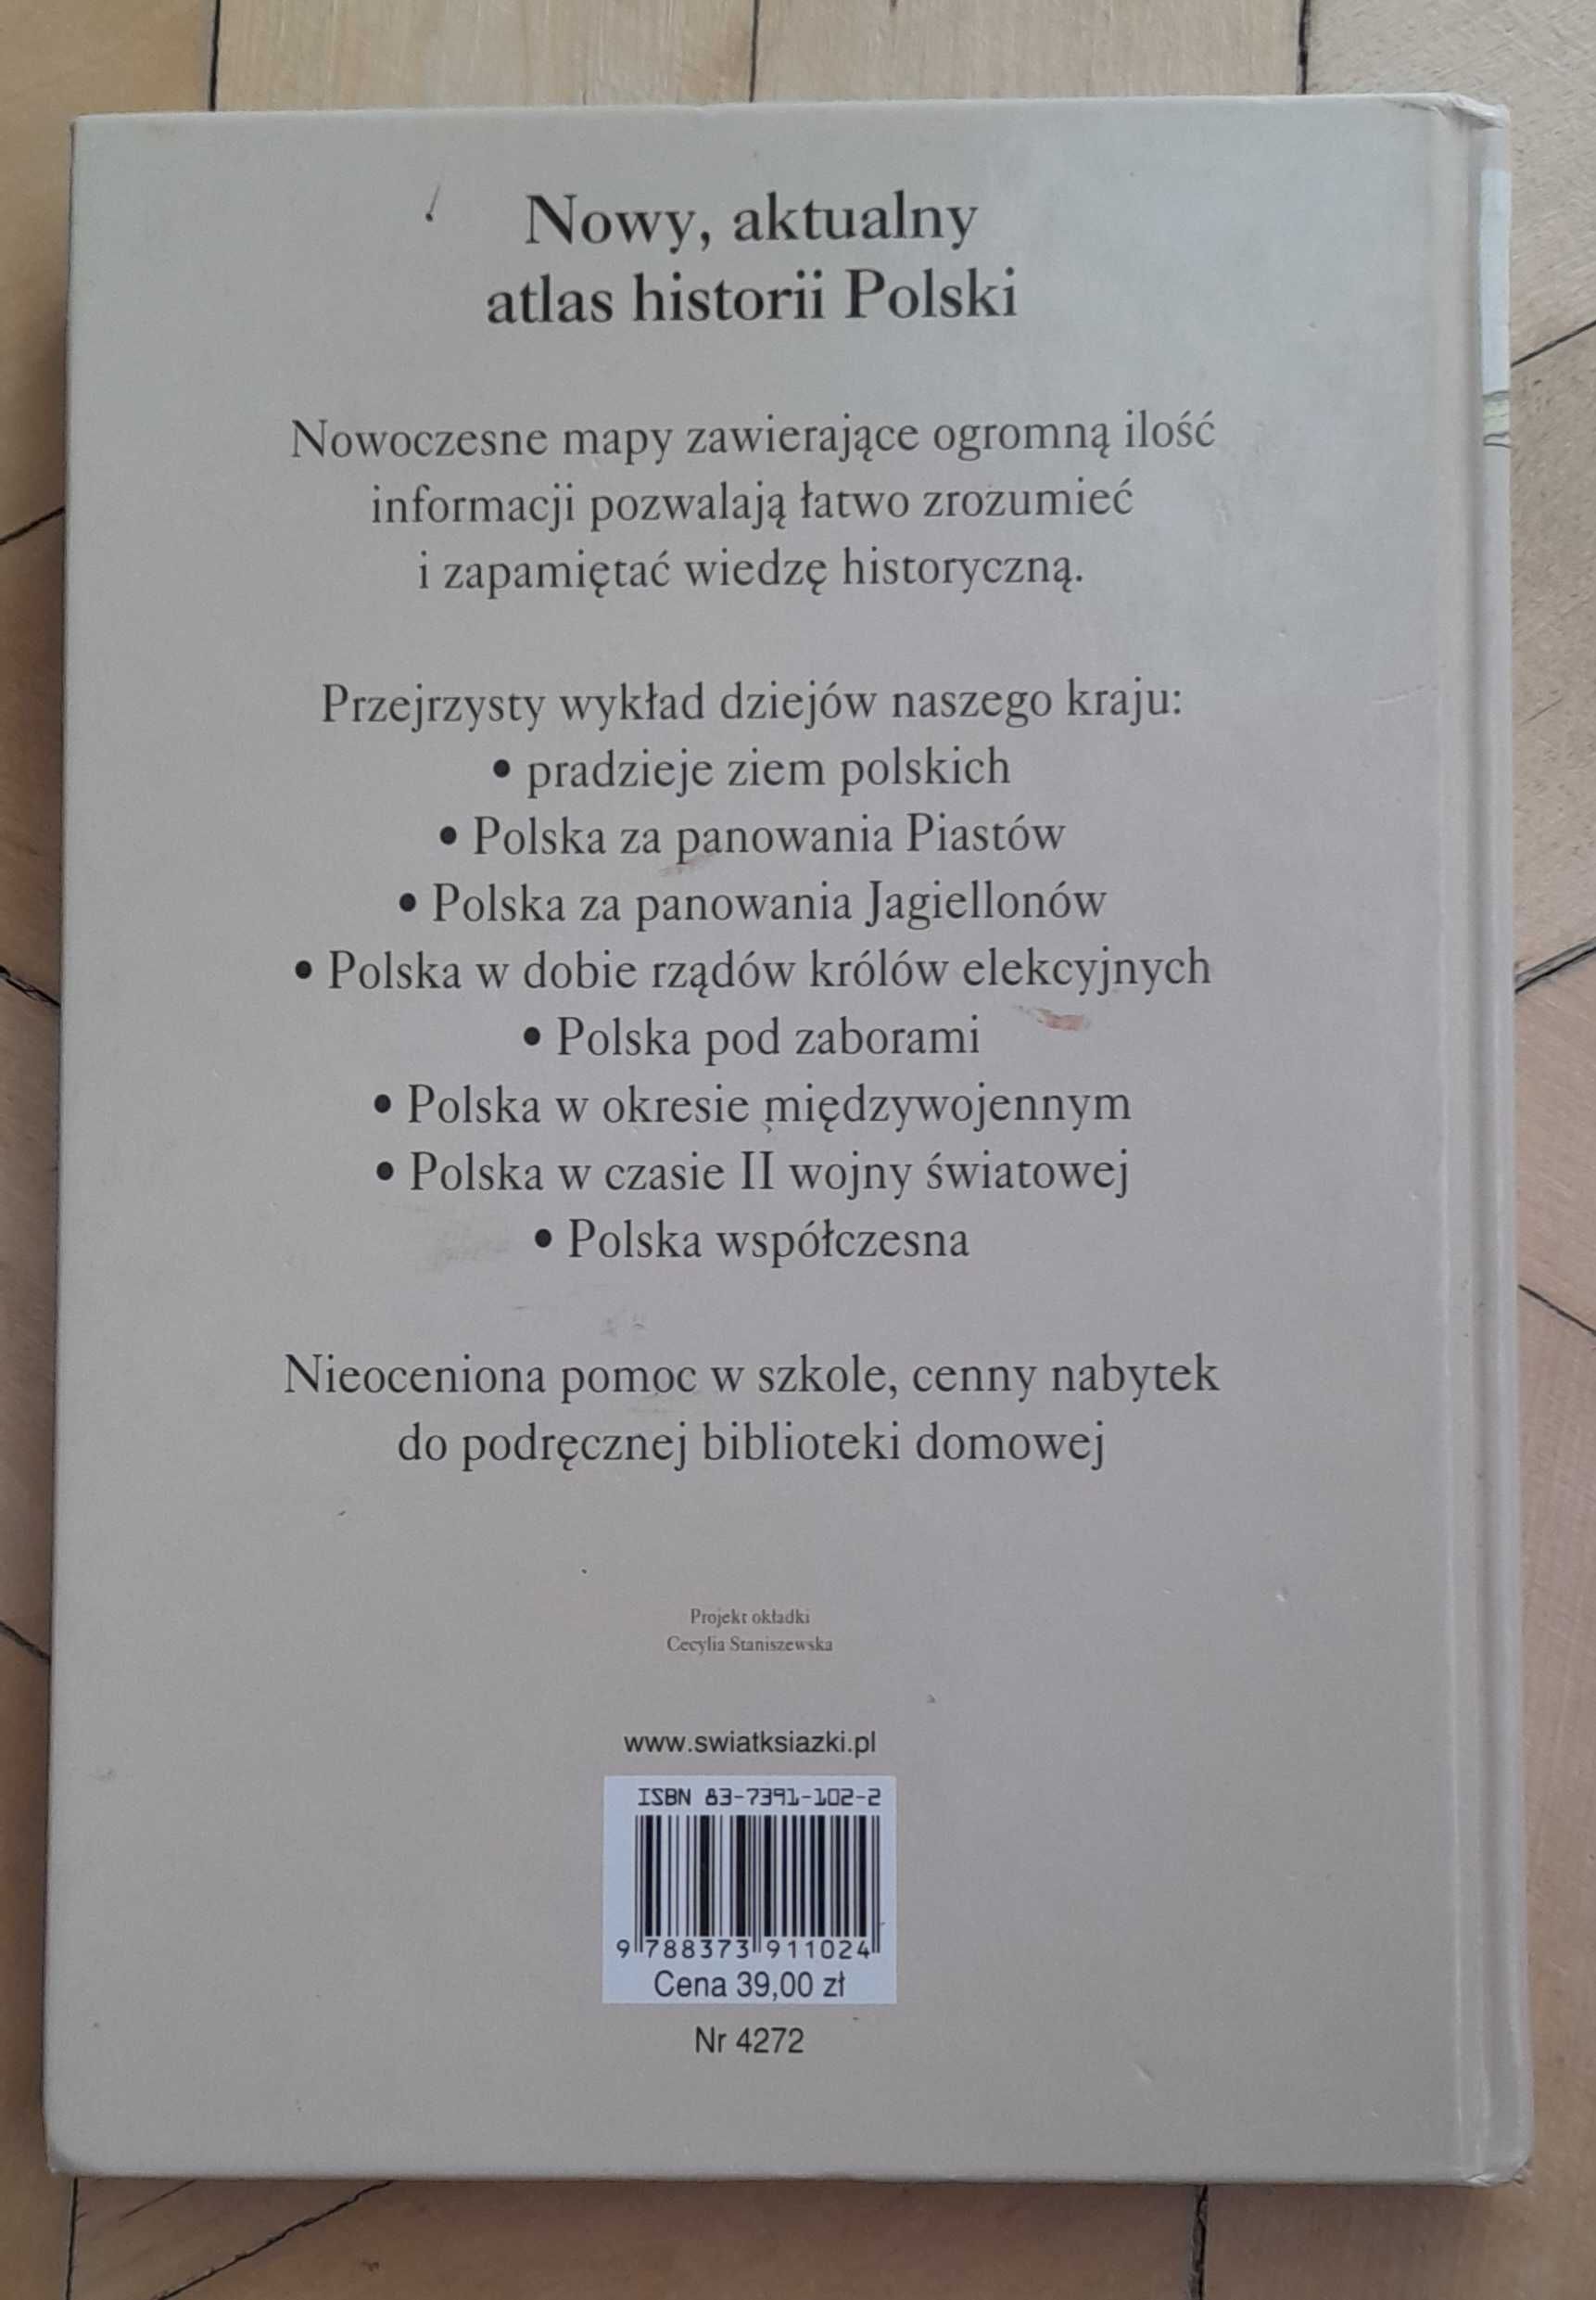 Atlas Historii Polski E.Olczak